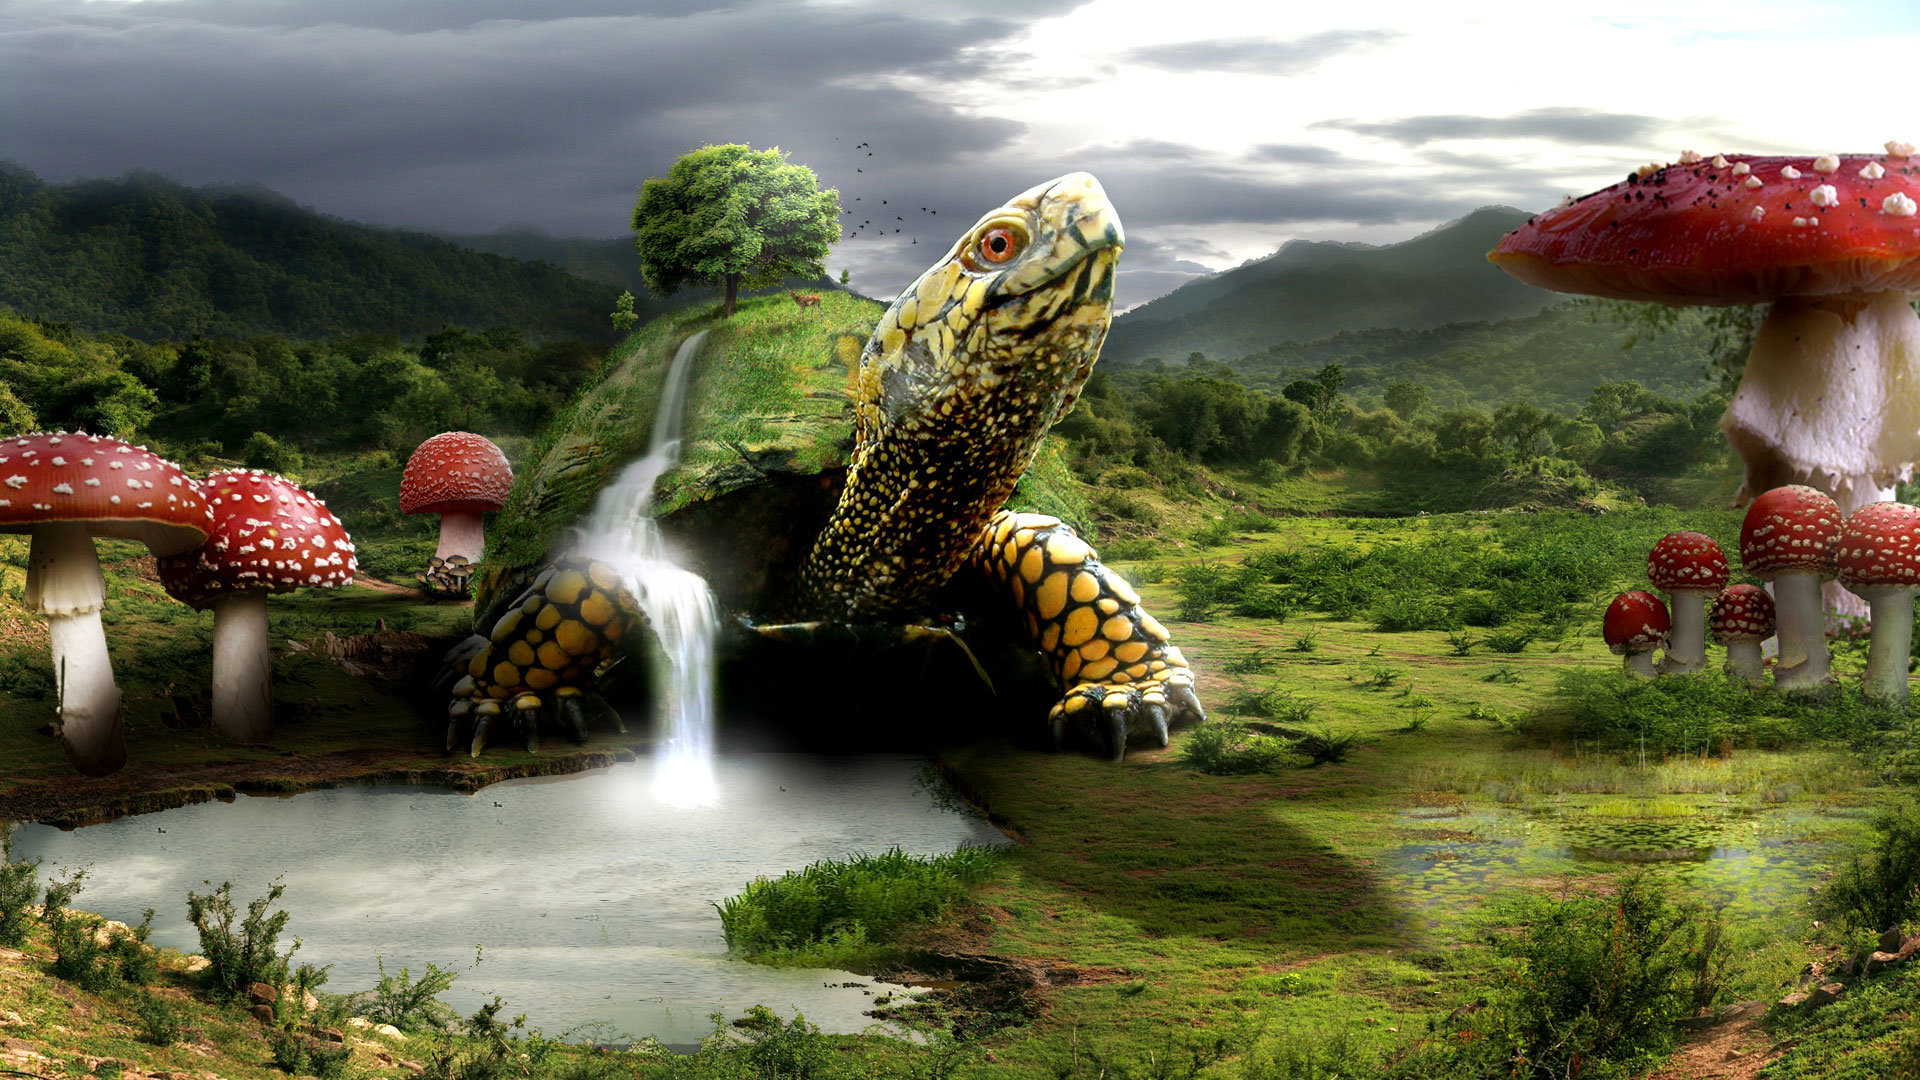 Best Turtle Fantasy wallpaper ID:373791 for High Resolution full hd 1080p desktop